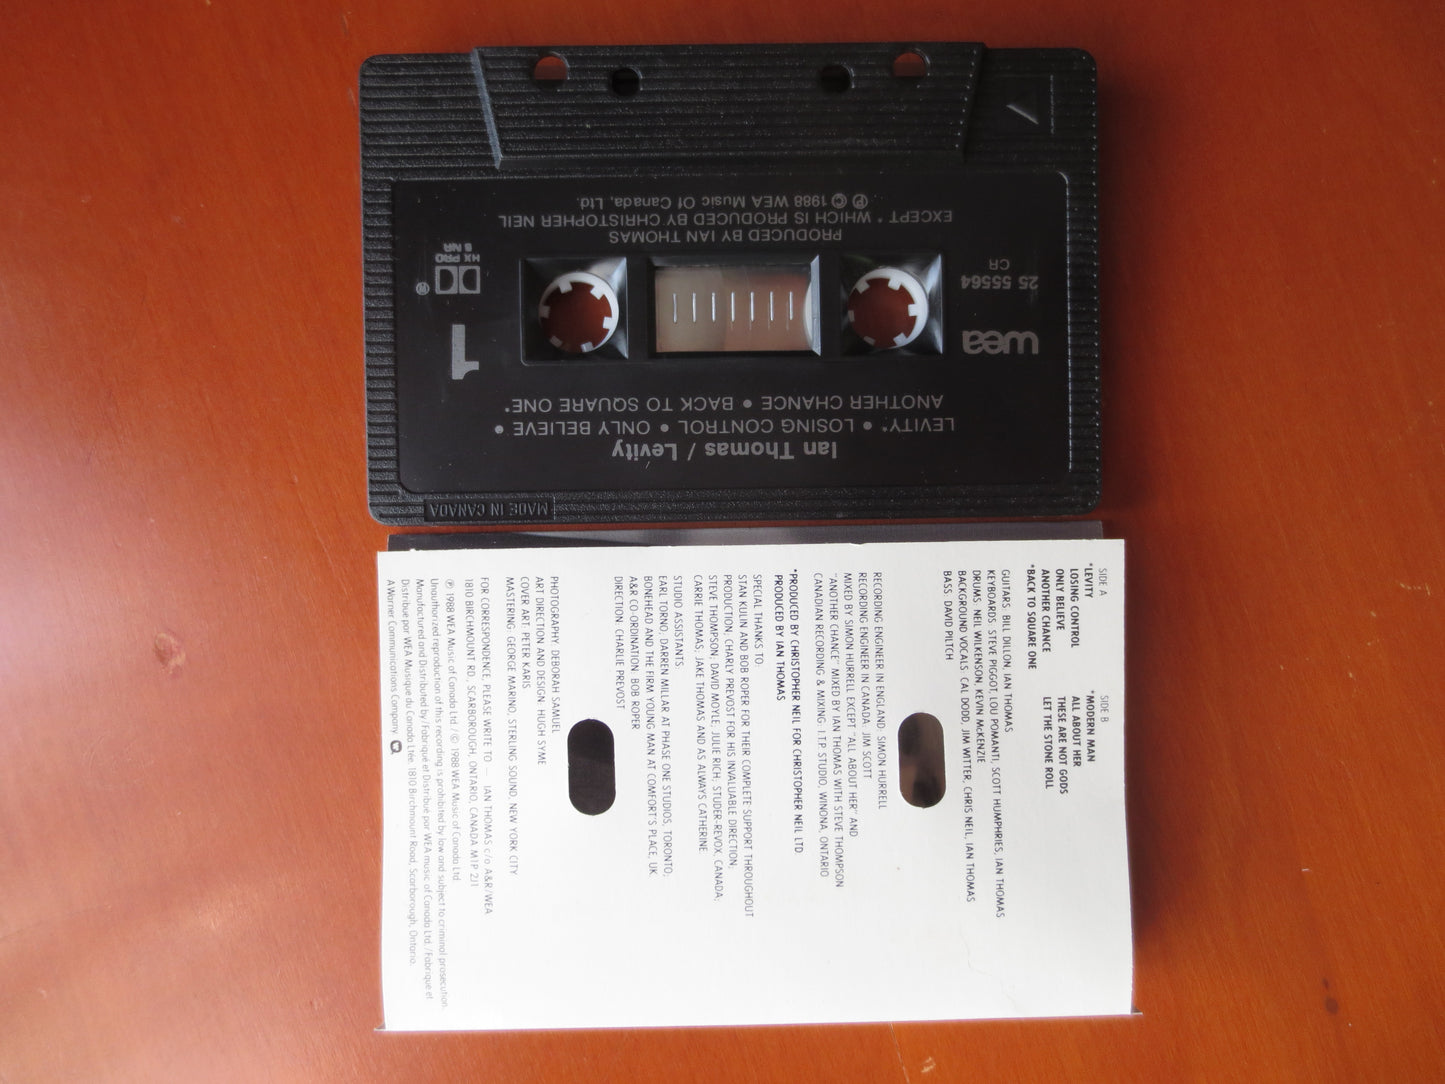 IAN THOMAS Tape, LEVITY Album, Ian Thomas Album, Ian Thomas Music, Ian Thomas Song, Tape Cassette, Cassette, 1988 Cassette